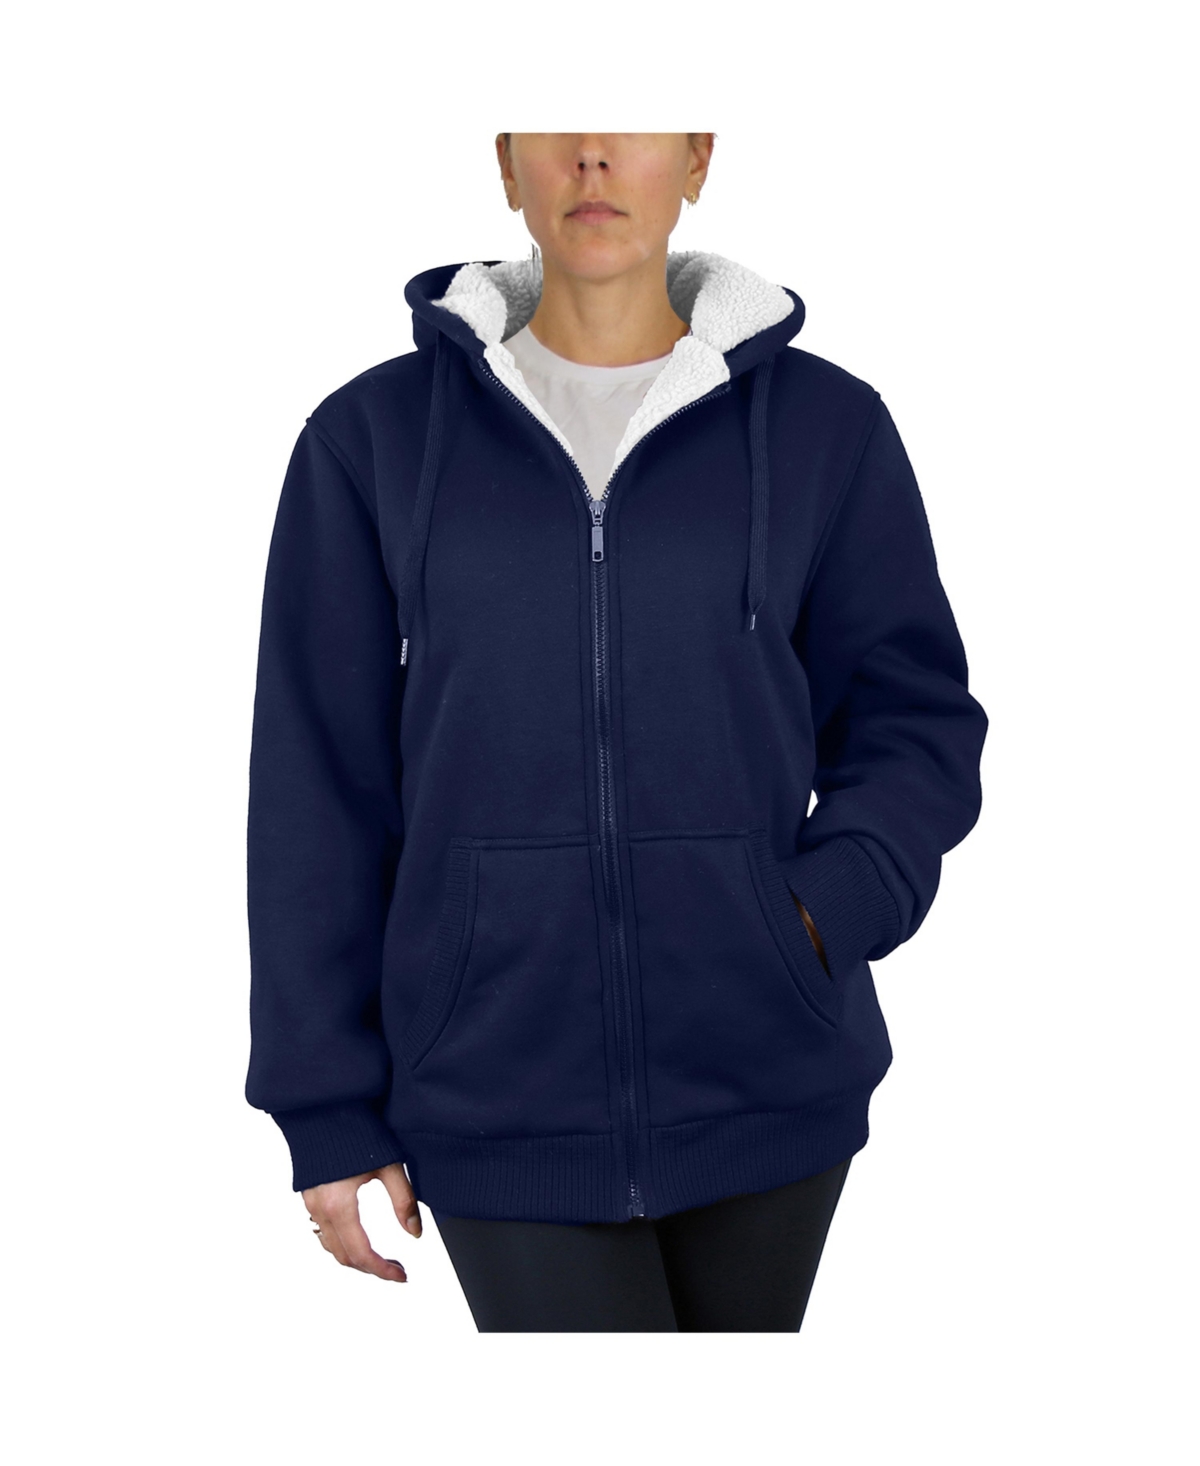  Galaxy By Harvic Women's Loose Fit Sherpa Lined Fleece Zip-Up Hoodie Sweatshirt